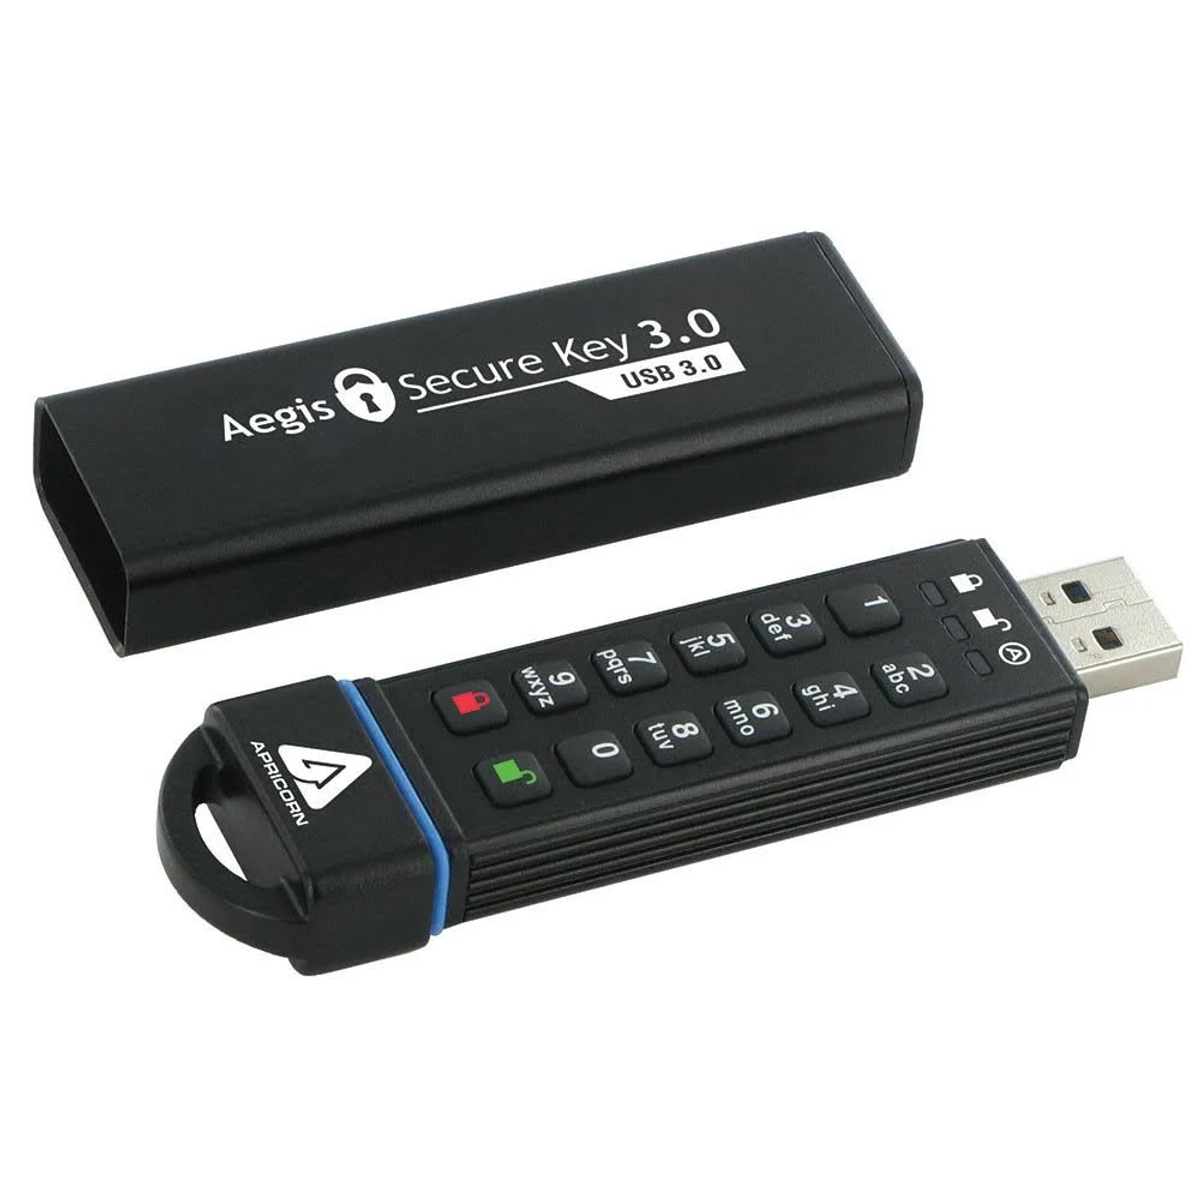 195 MB) APRICORN USB-Flash-Laufwerk ASK3-30GB (Schwarz,